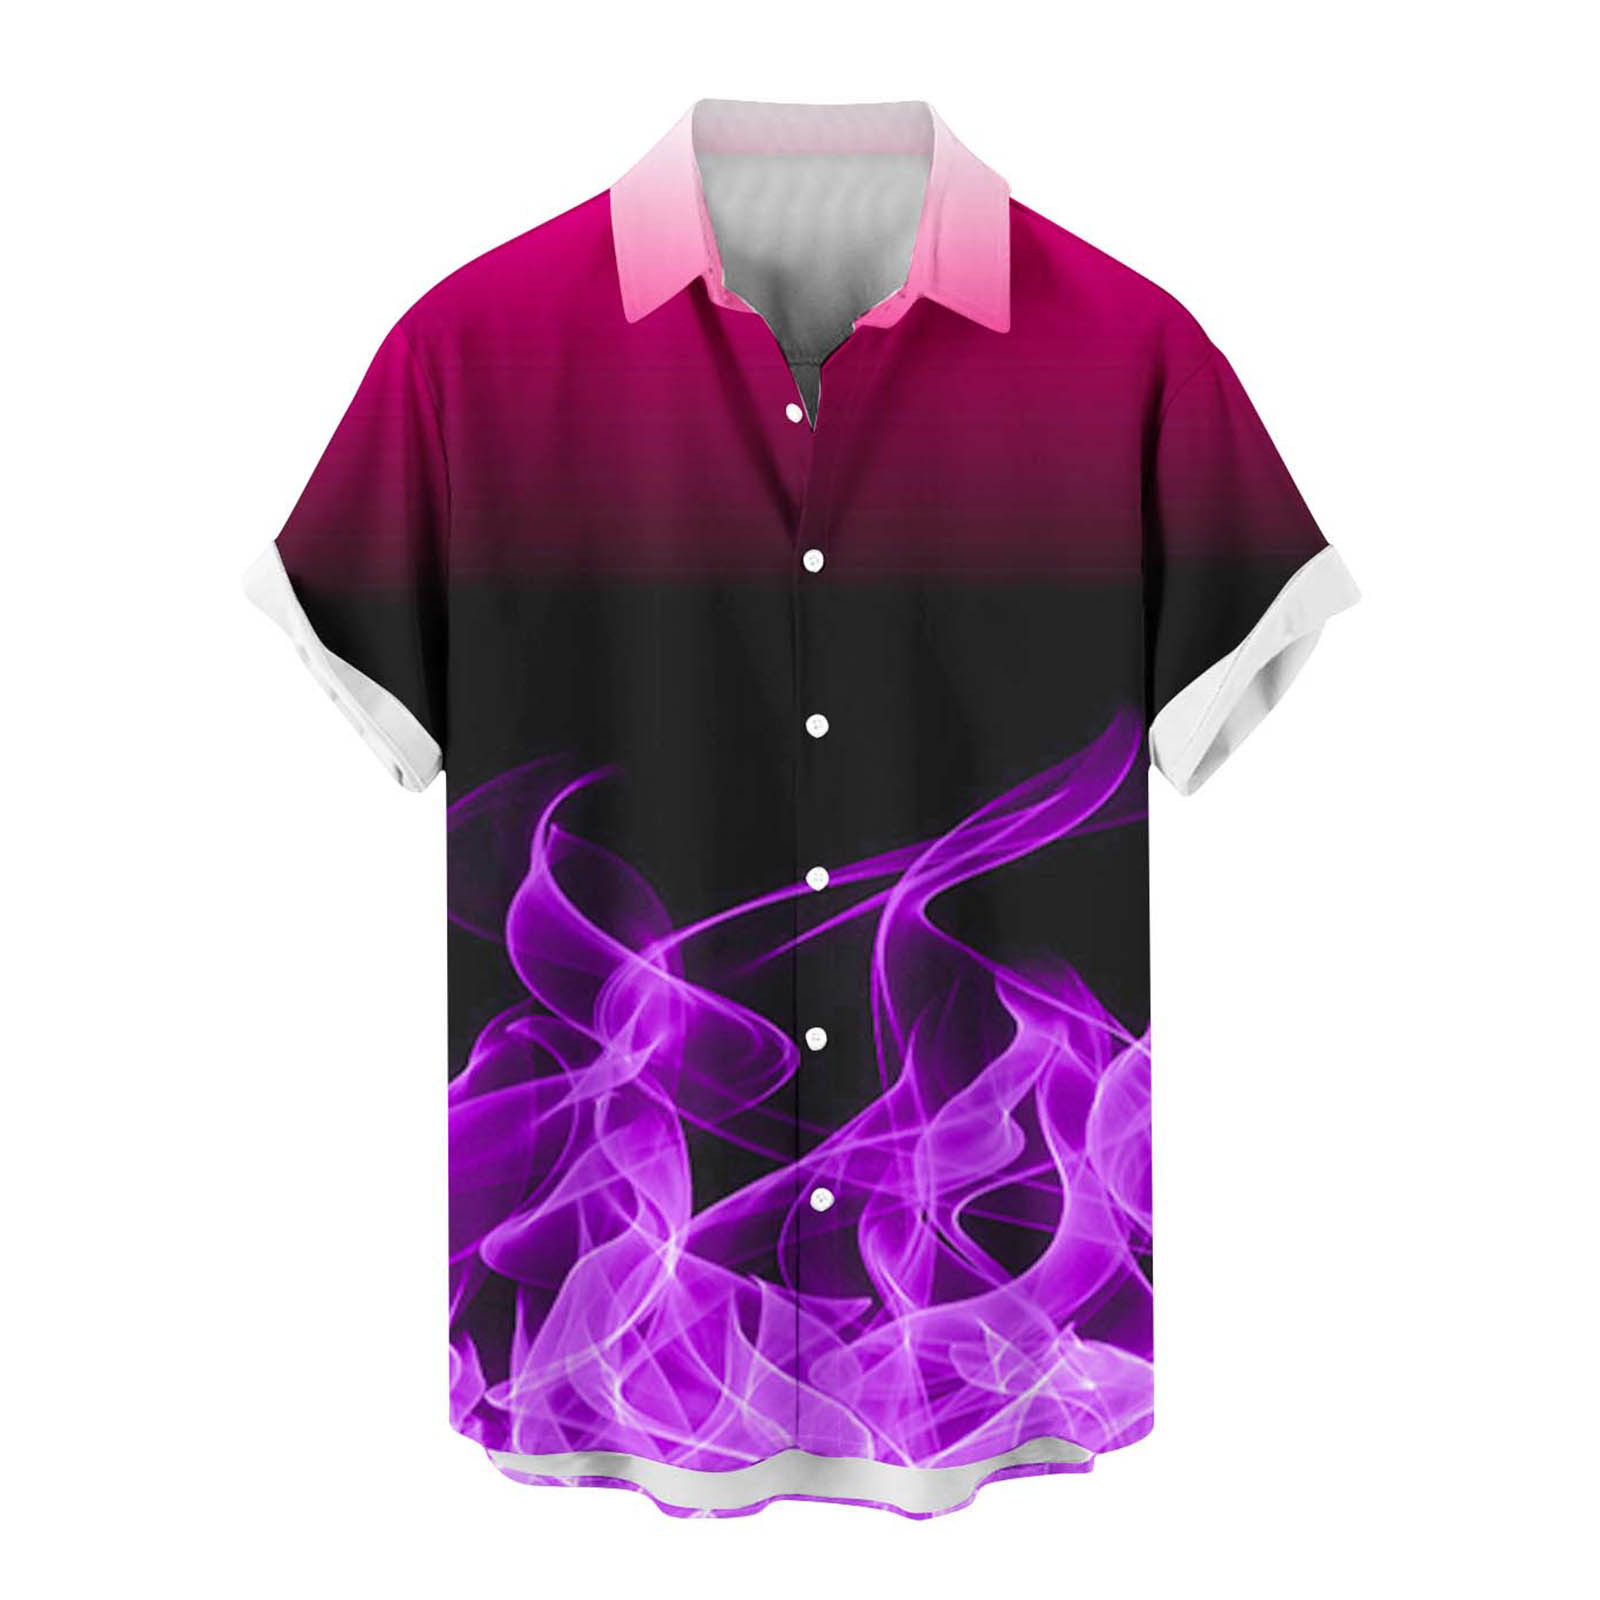 QIPOPIQ Men's Short Sleeve Turndown Collar Shirts Men 3D Fire Pattern Hawaiian Shirt Summer Fashion Printed Have Pockets Button Shirt Tops Tees Shirt Gift for Father & Him 2023 Deals Purple M - image 1 of 4